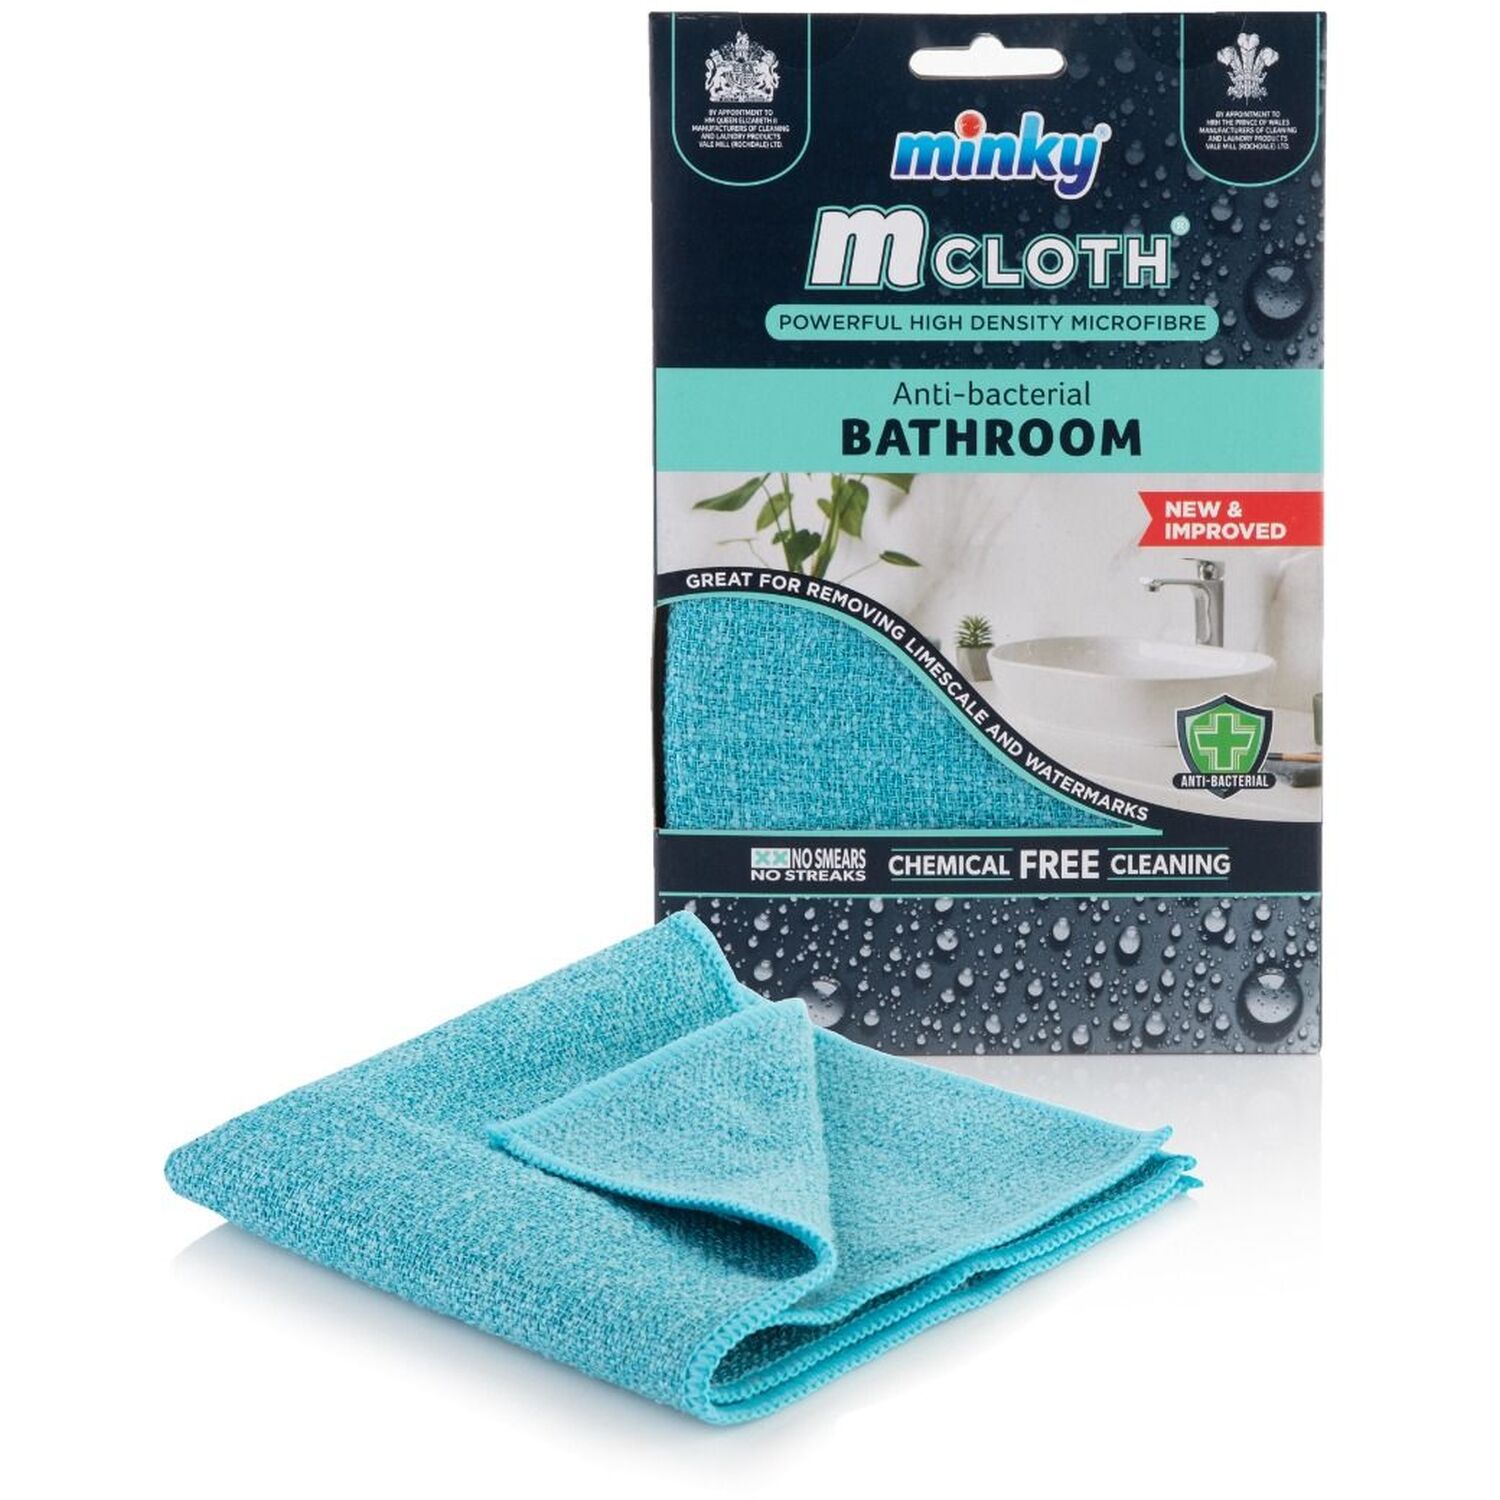 Minky Antibacterial Bathroom M Cloth - Blue Image 1